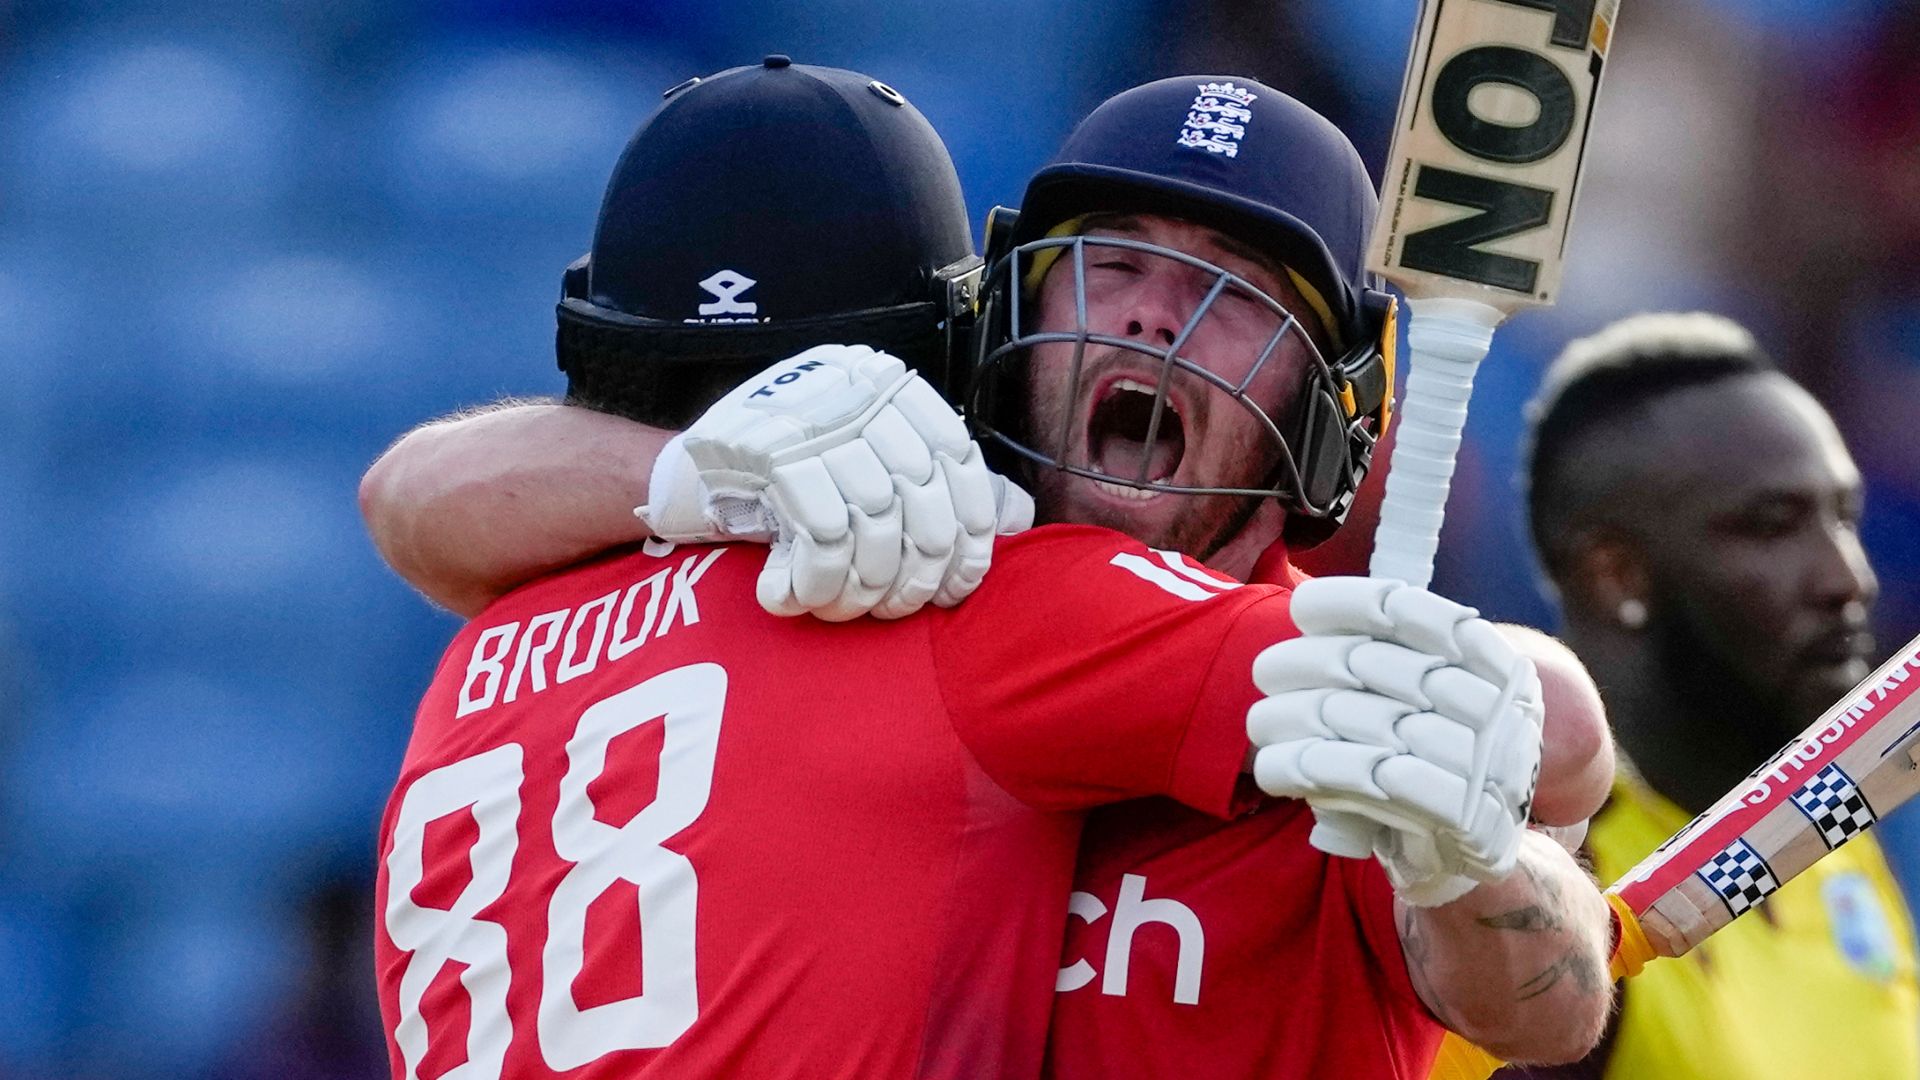 Salt steps up to be match-winner England were seeking with maiden T20I ton